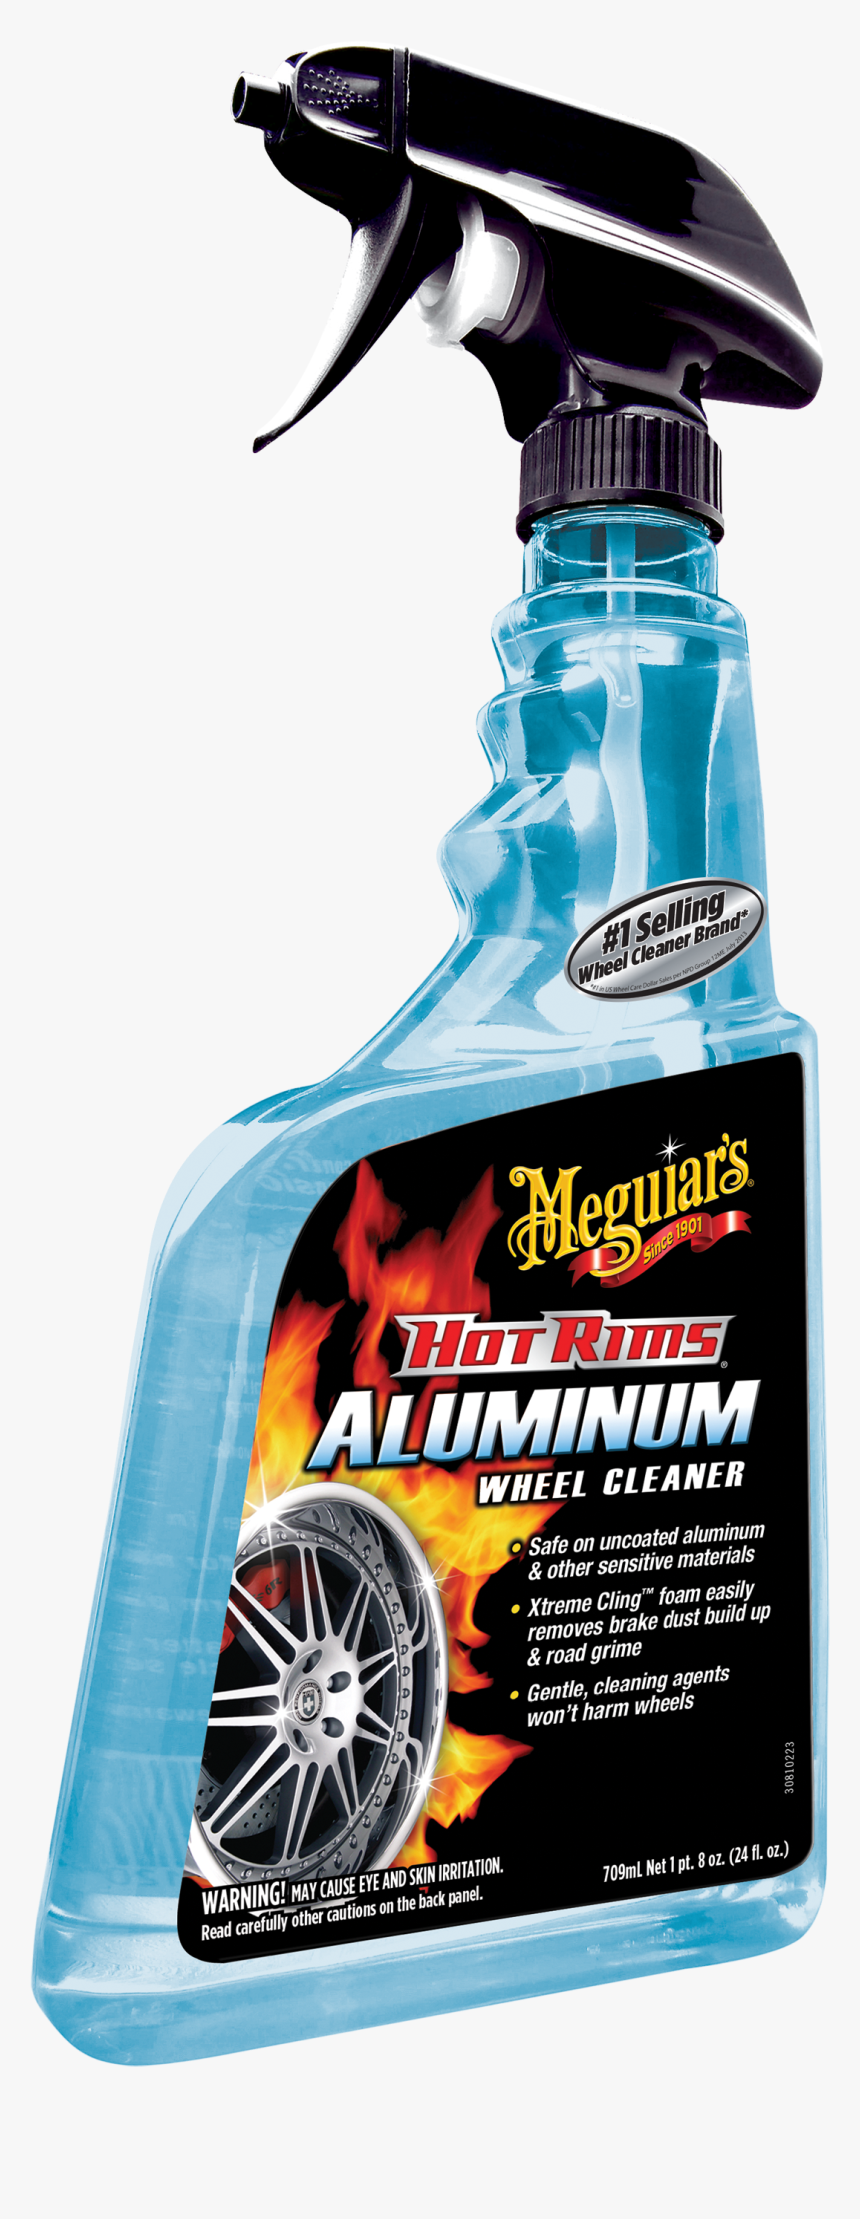 Aluminum Wheel Cleaner - Meguiars Hot Rims Aluminum Wheel Cleaner, HD Png Download, Free Download